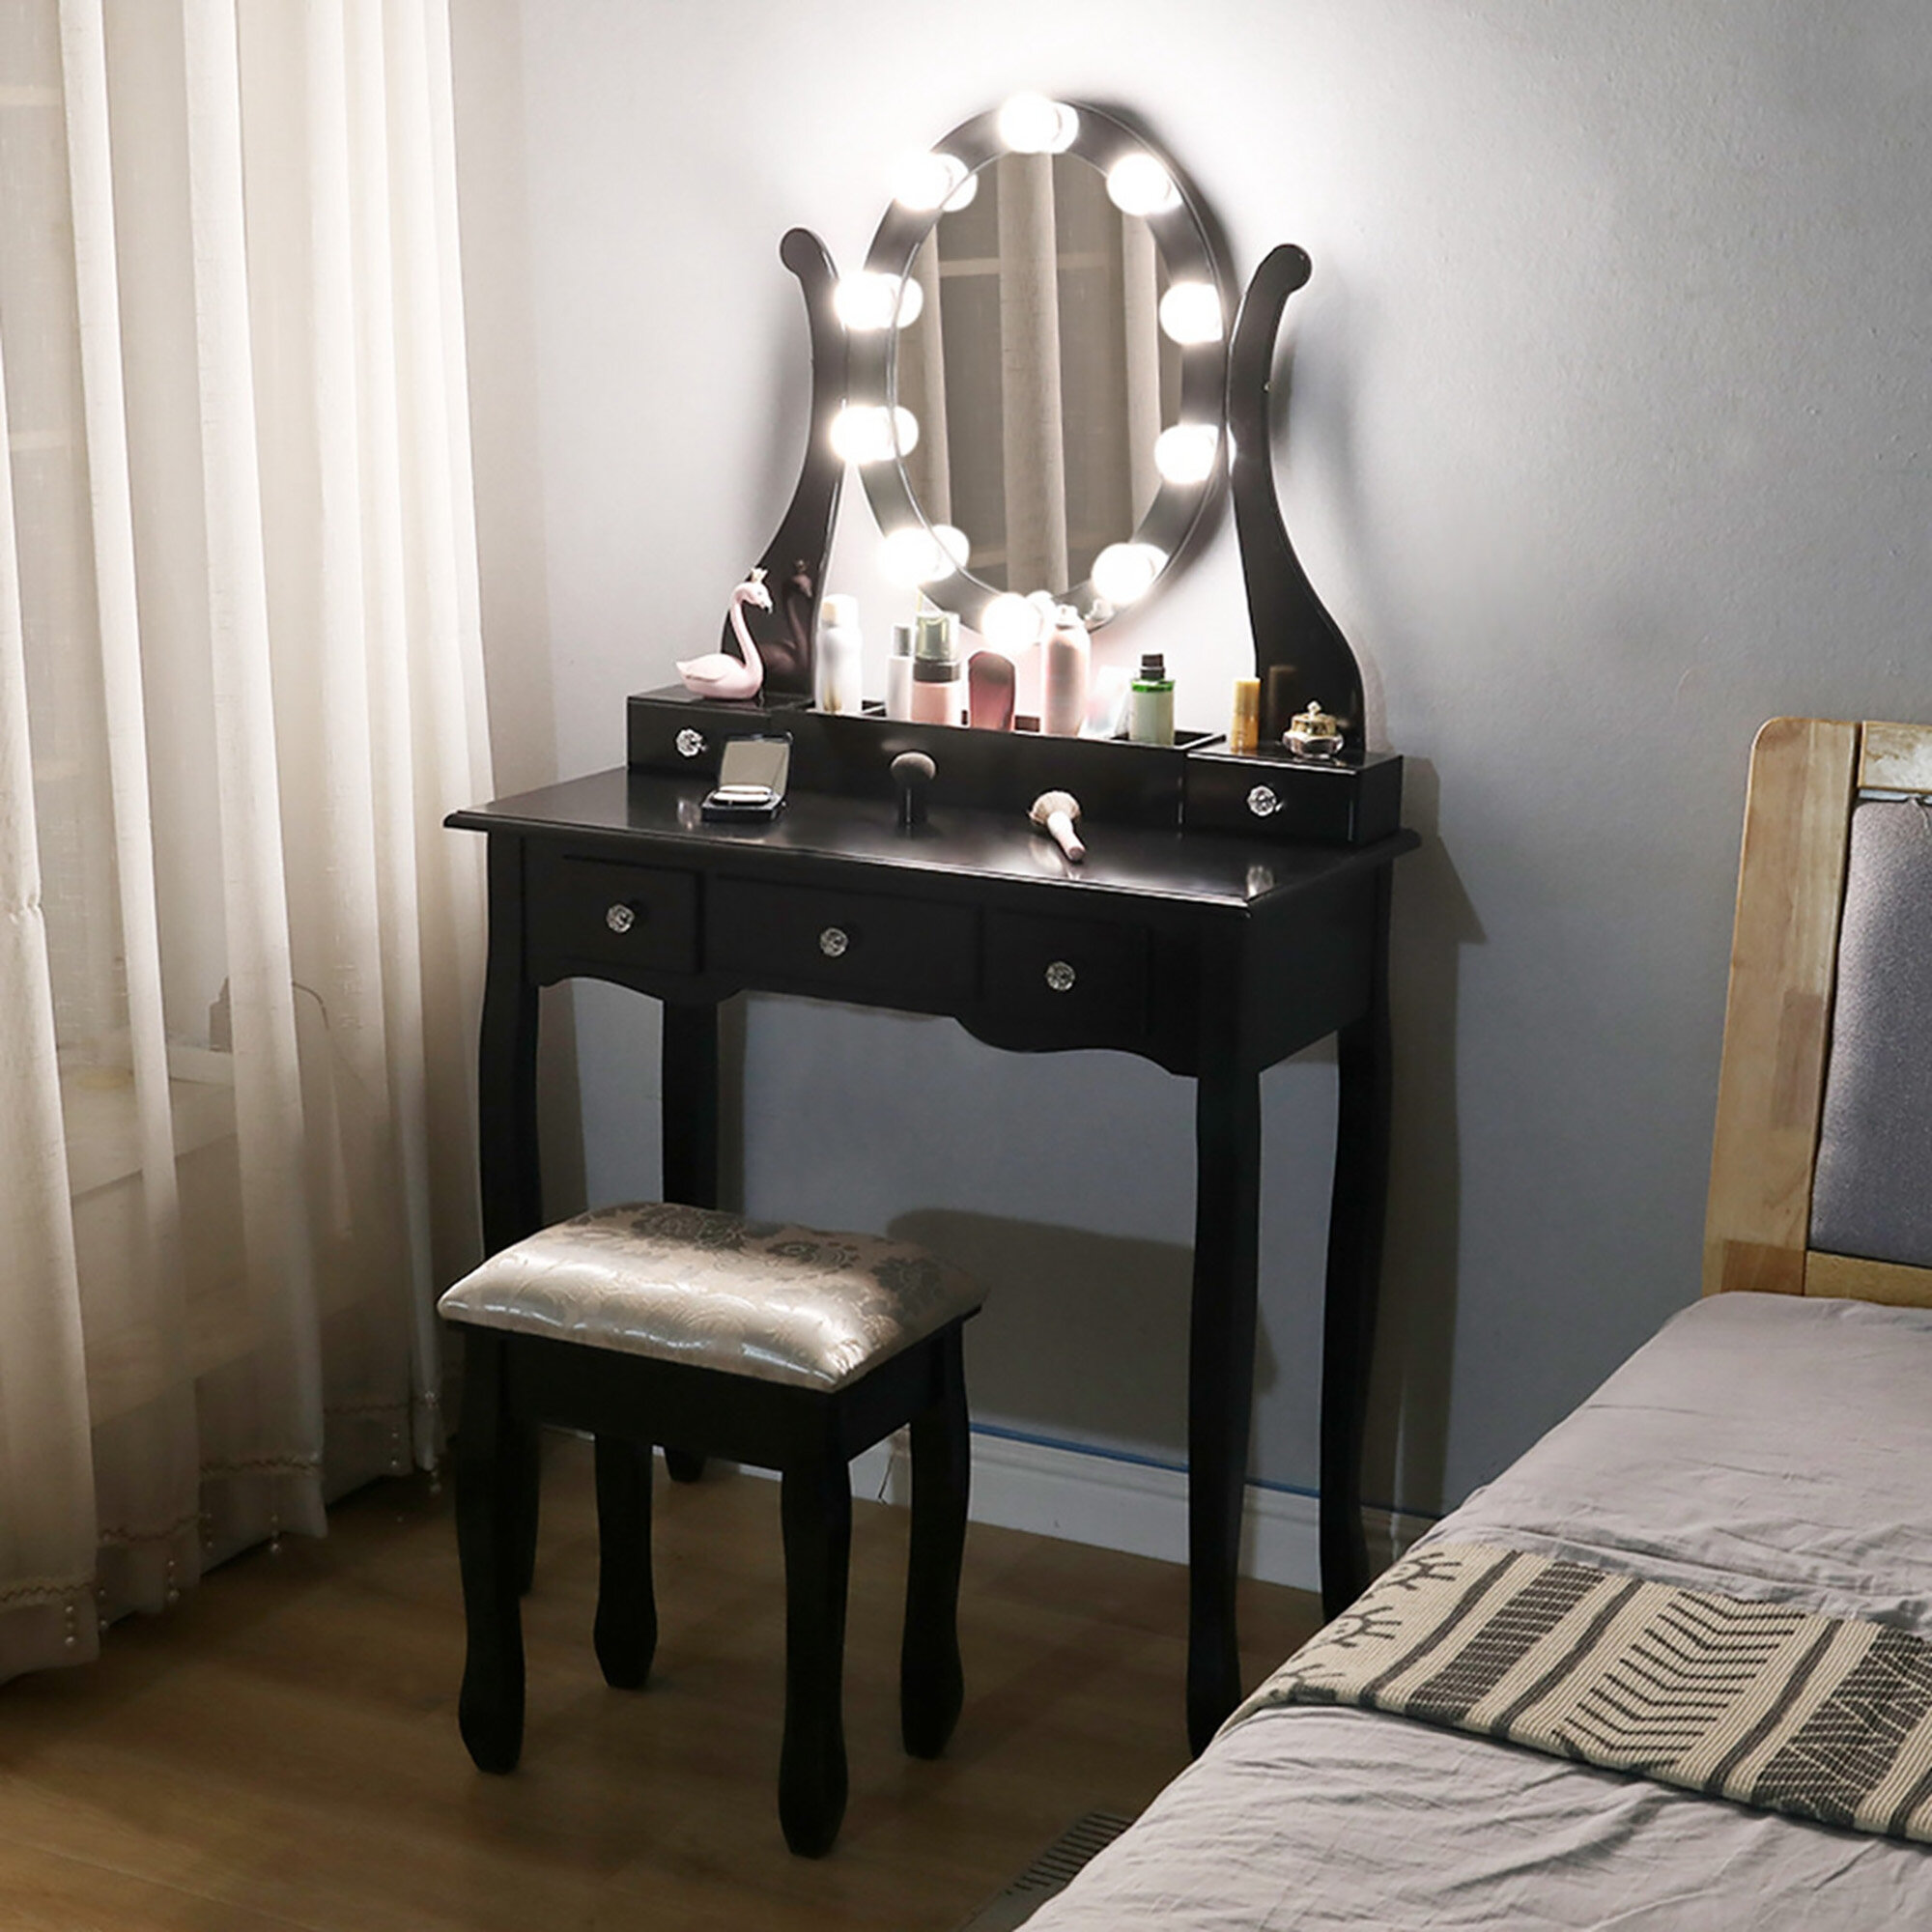 Details about   Vanity Set with 12 Lighted Mirror Makeup Dressing Table Dresser Desk Balck US 